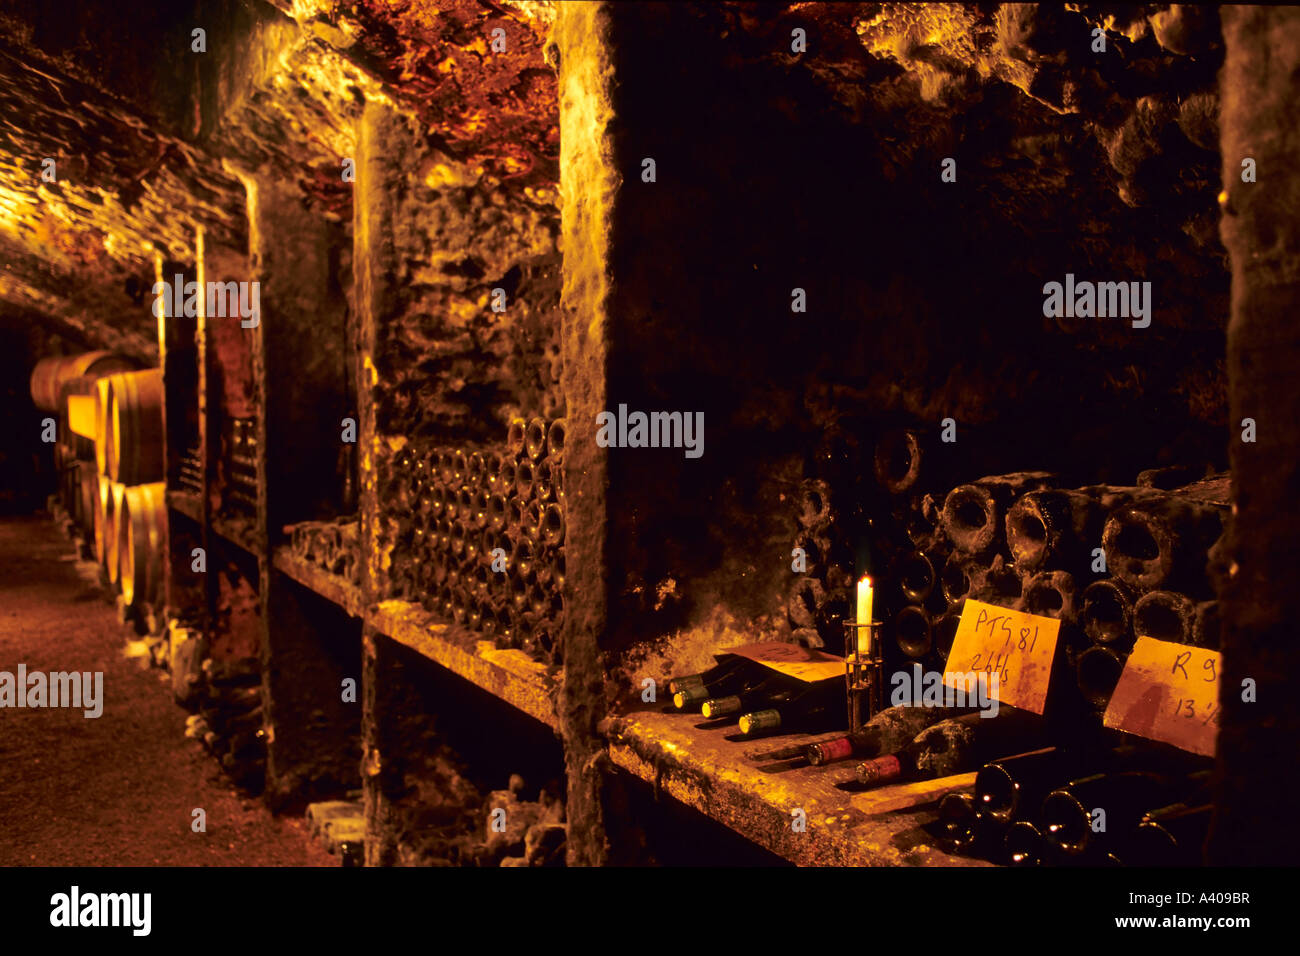 FRANCE BURGUNDY  POMMARD  DUSTY WINE BOTTLES IN  LEJEUNE  WINERY'S CELLAR Stock Photo